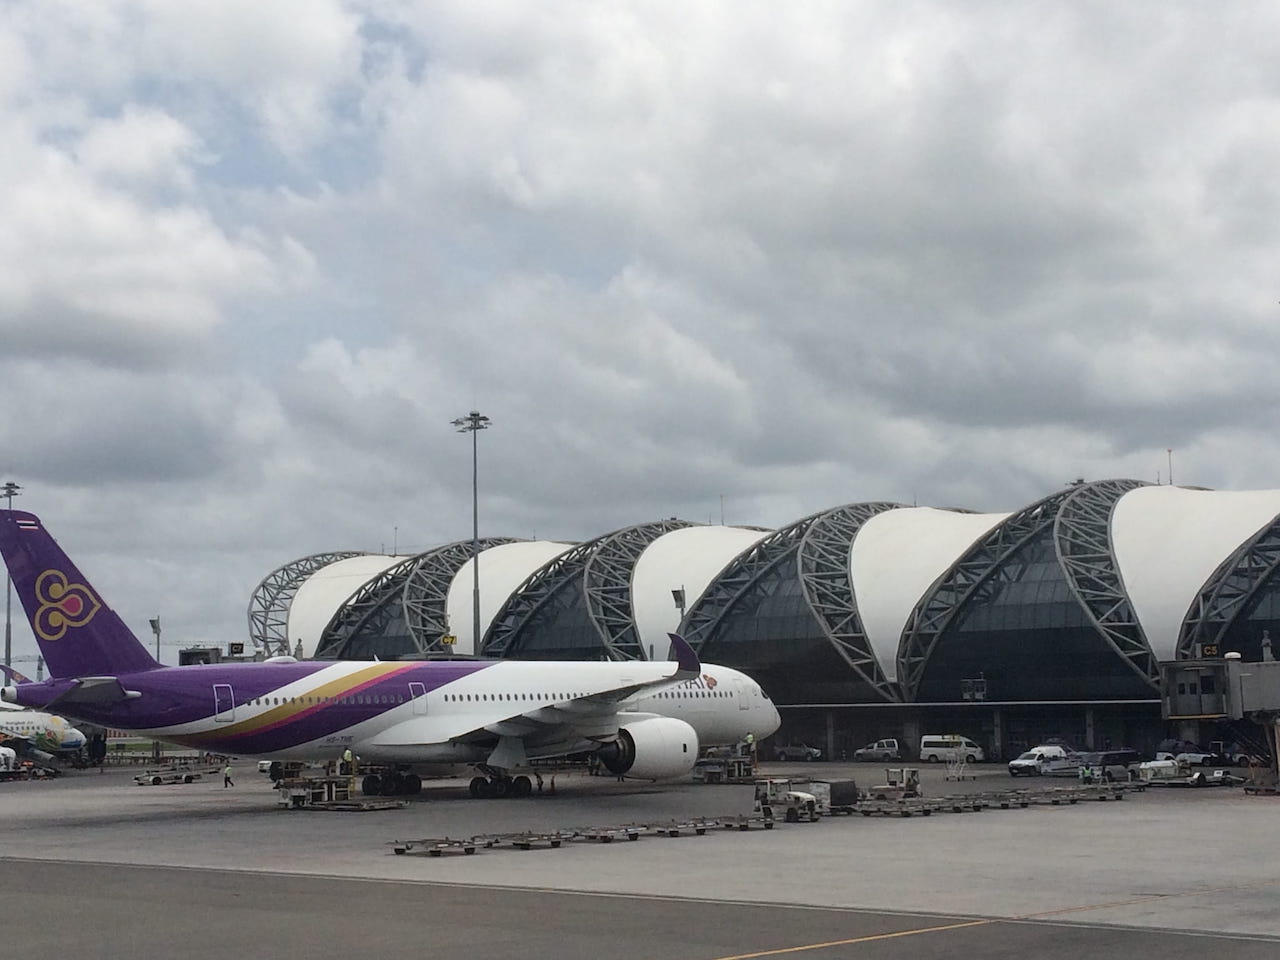 Thai Airways Airbus A350 aircraft at Bangkok Suvarnabhumi Airport in Samut Prakan